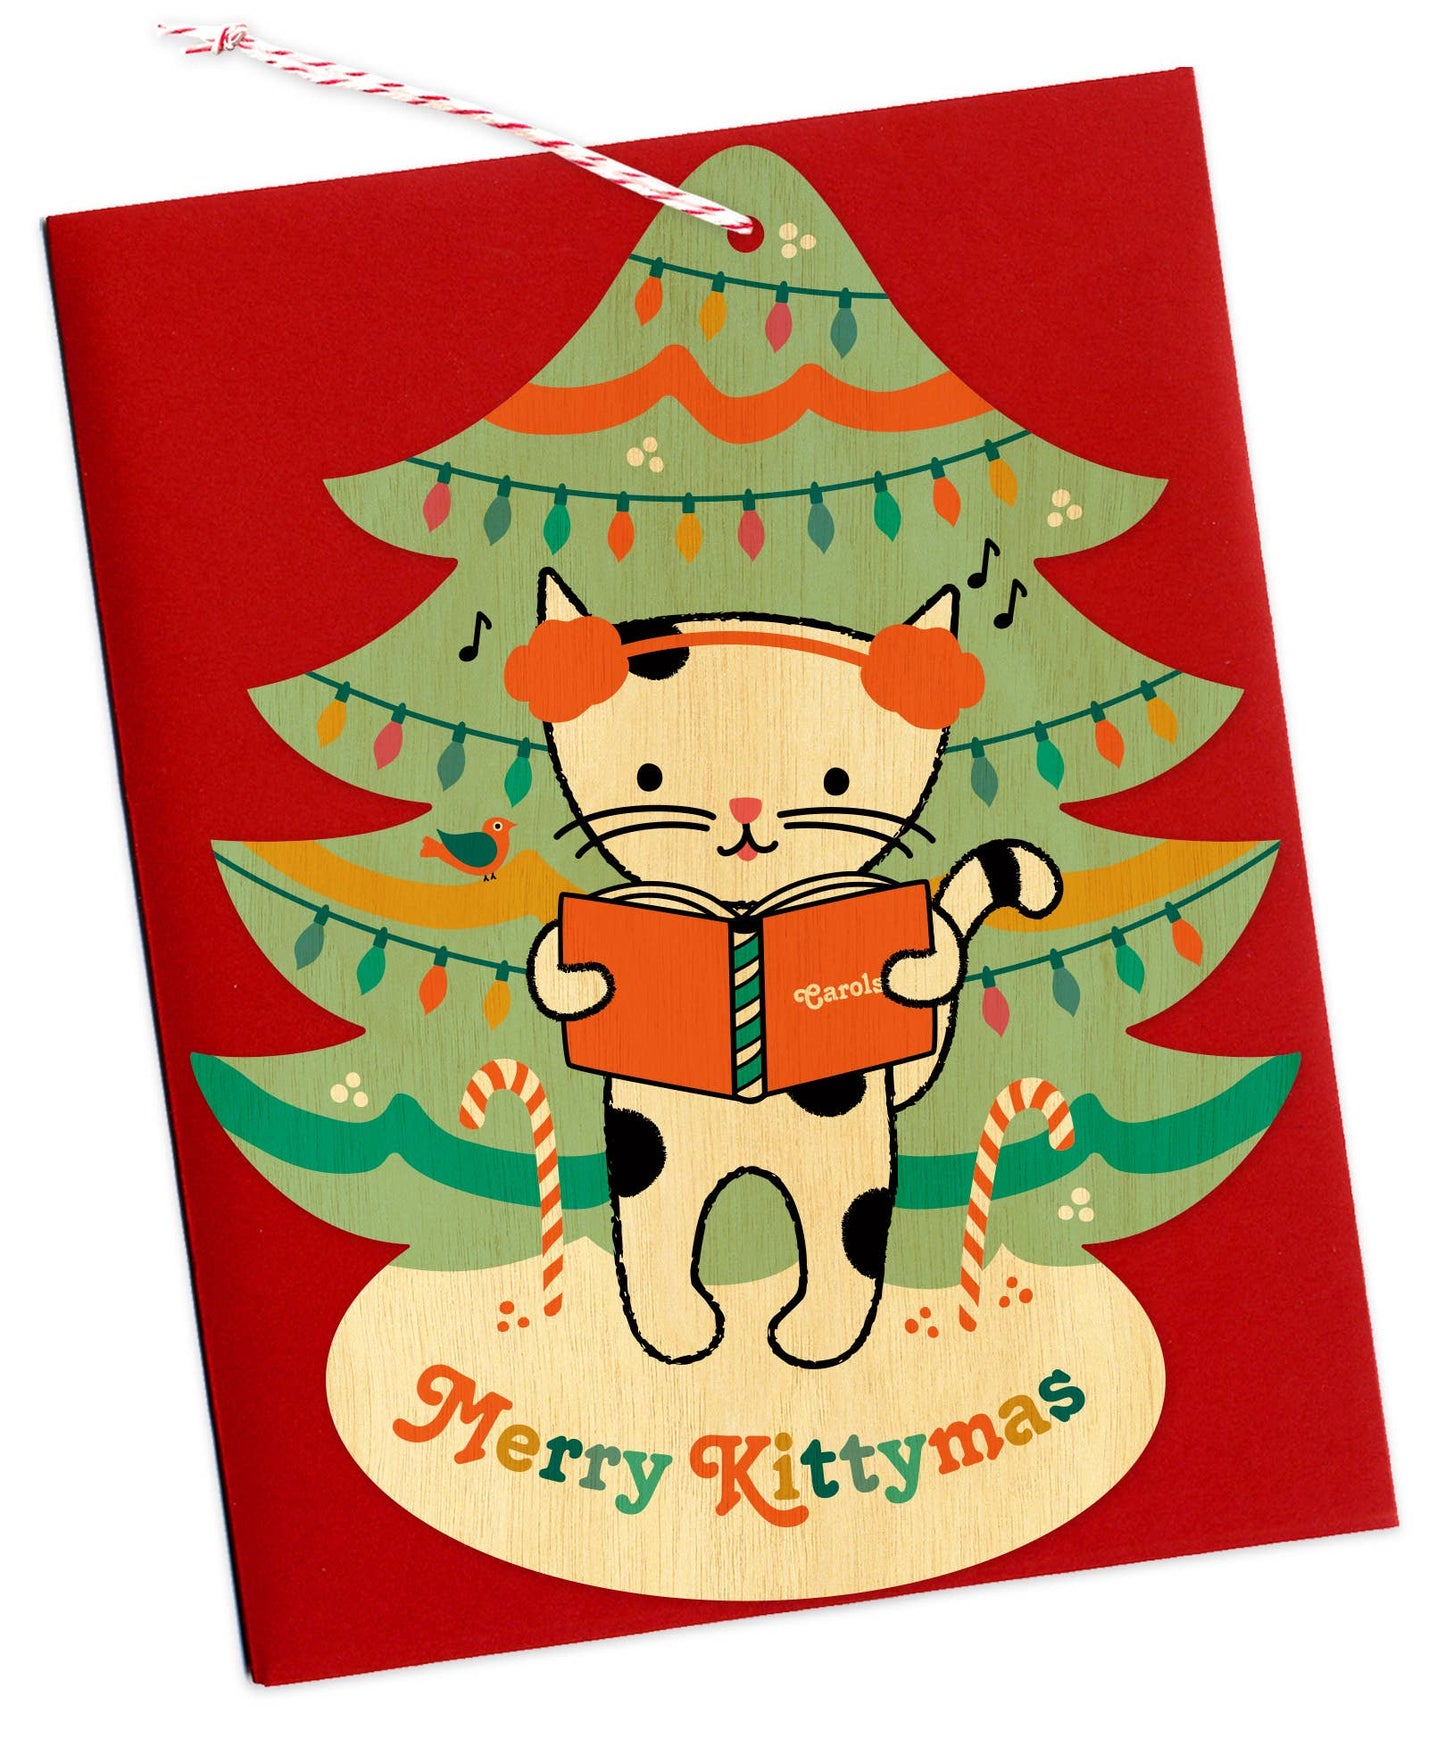 Night Owl Paper Goods - Kitty Carols Wood Ornament Holiday Card